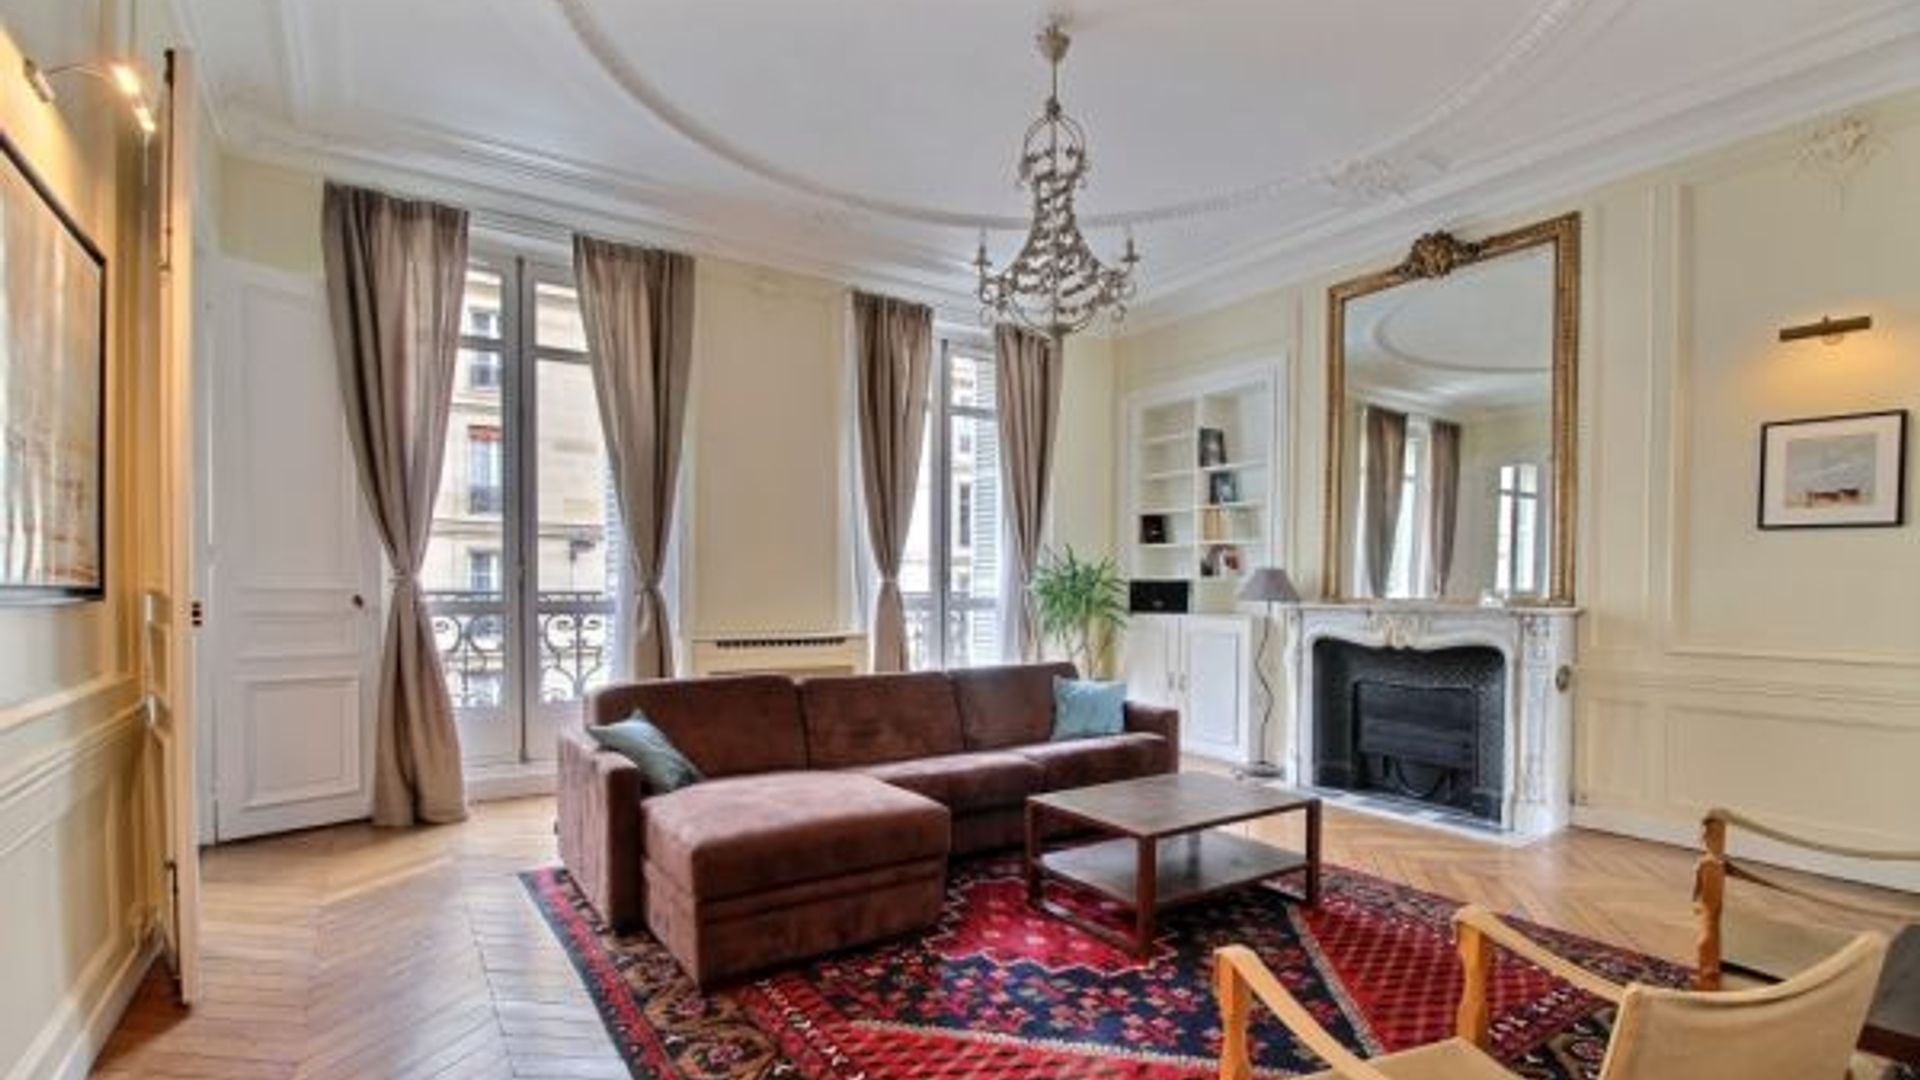 4 bedroom apartment at 61 Rue Claude Bernard, 75005 Paris, France ...